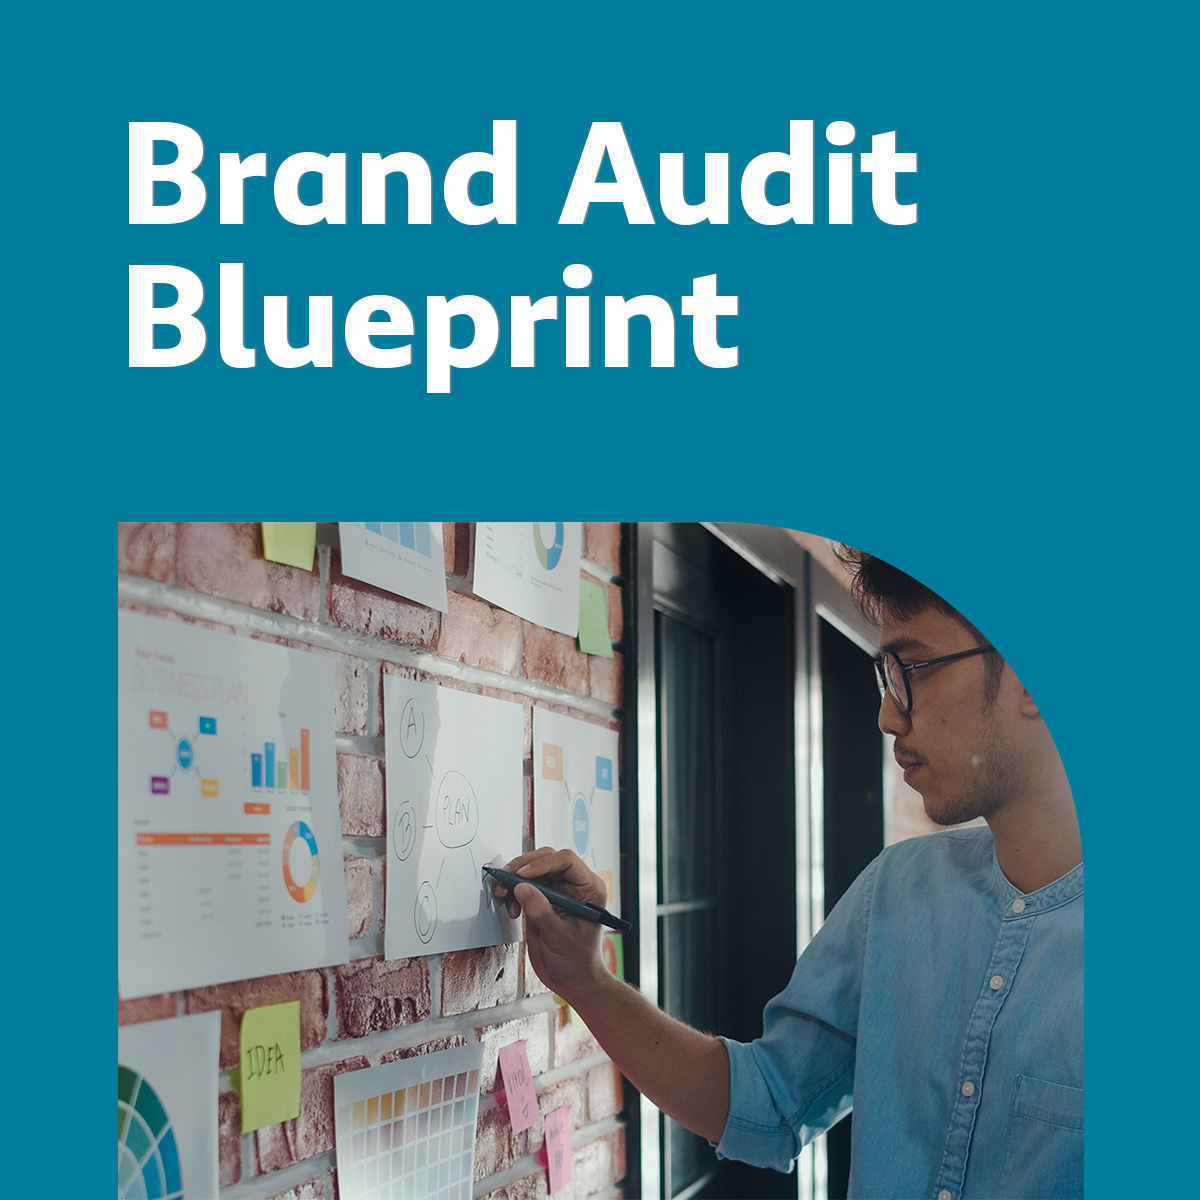 Brand audit blueprint